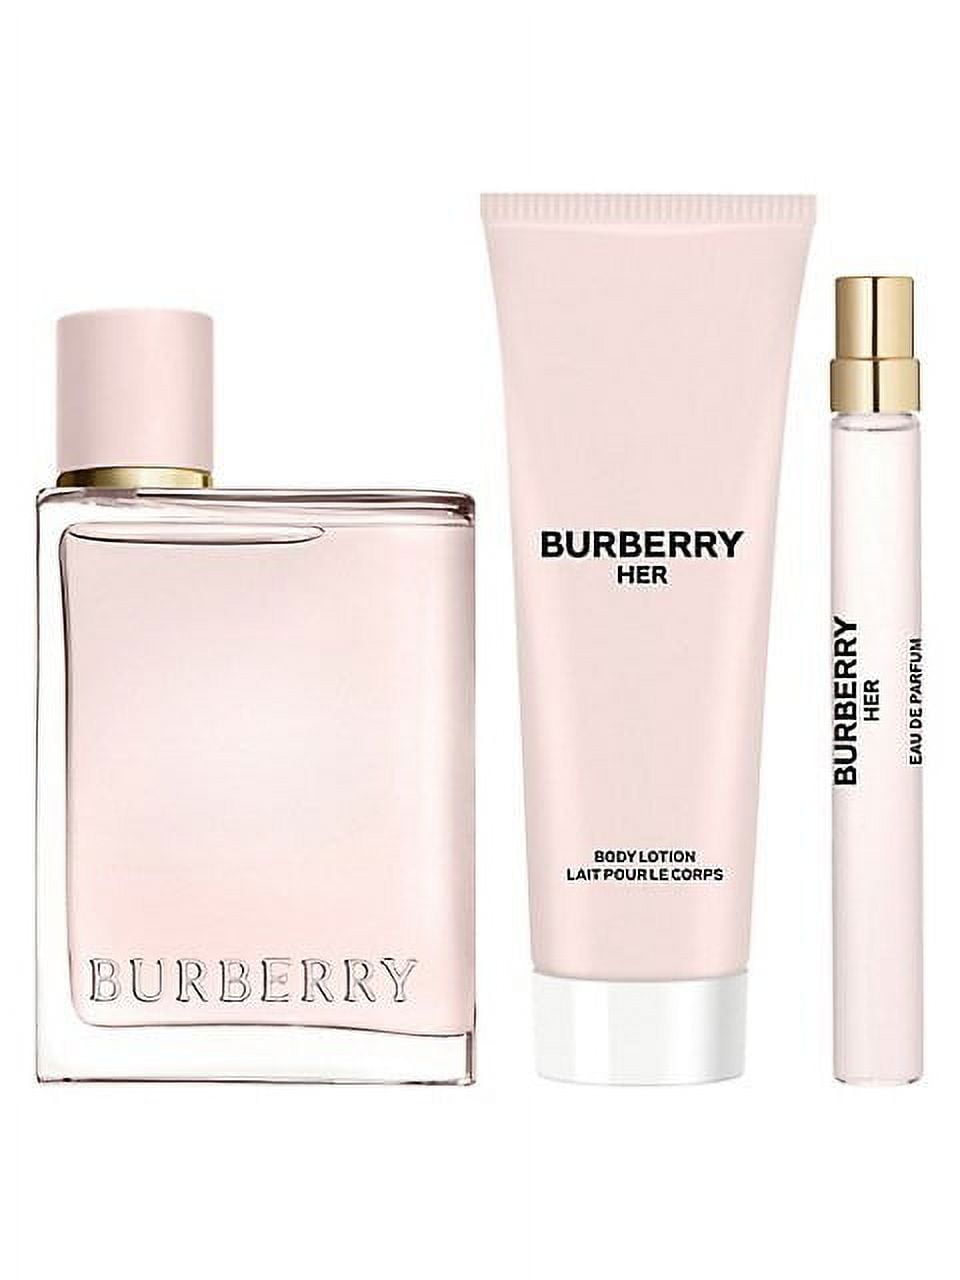 BURBERRY HER by Burberry 3 PIECE GIFT SET ( 3.3oz EDP Spray + 2.5